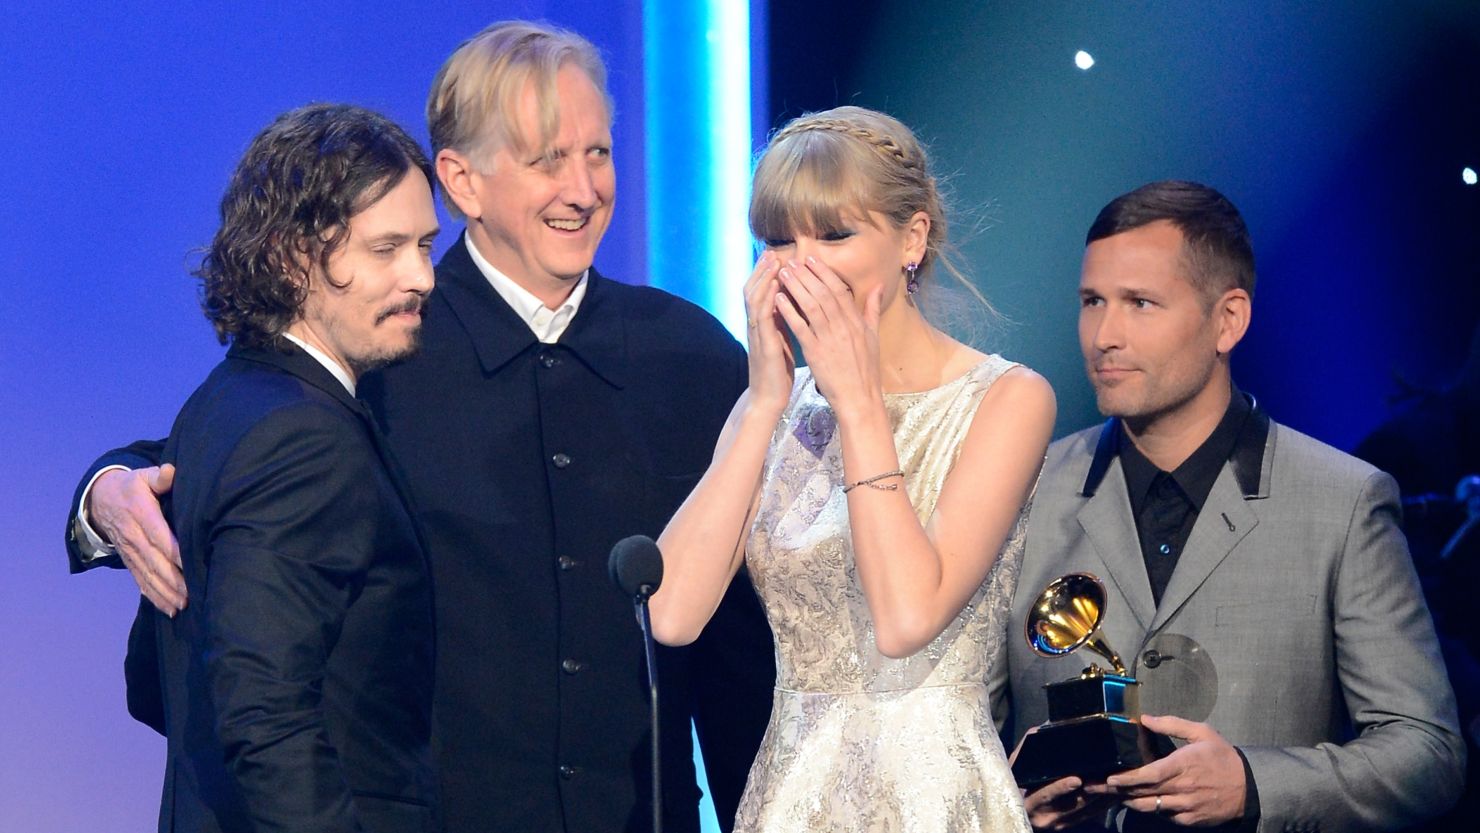 Taylor Swift accepts the Grammy award for best song written for visual media along with John Paul White and T Bone Burnett.